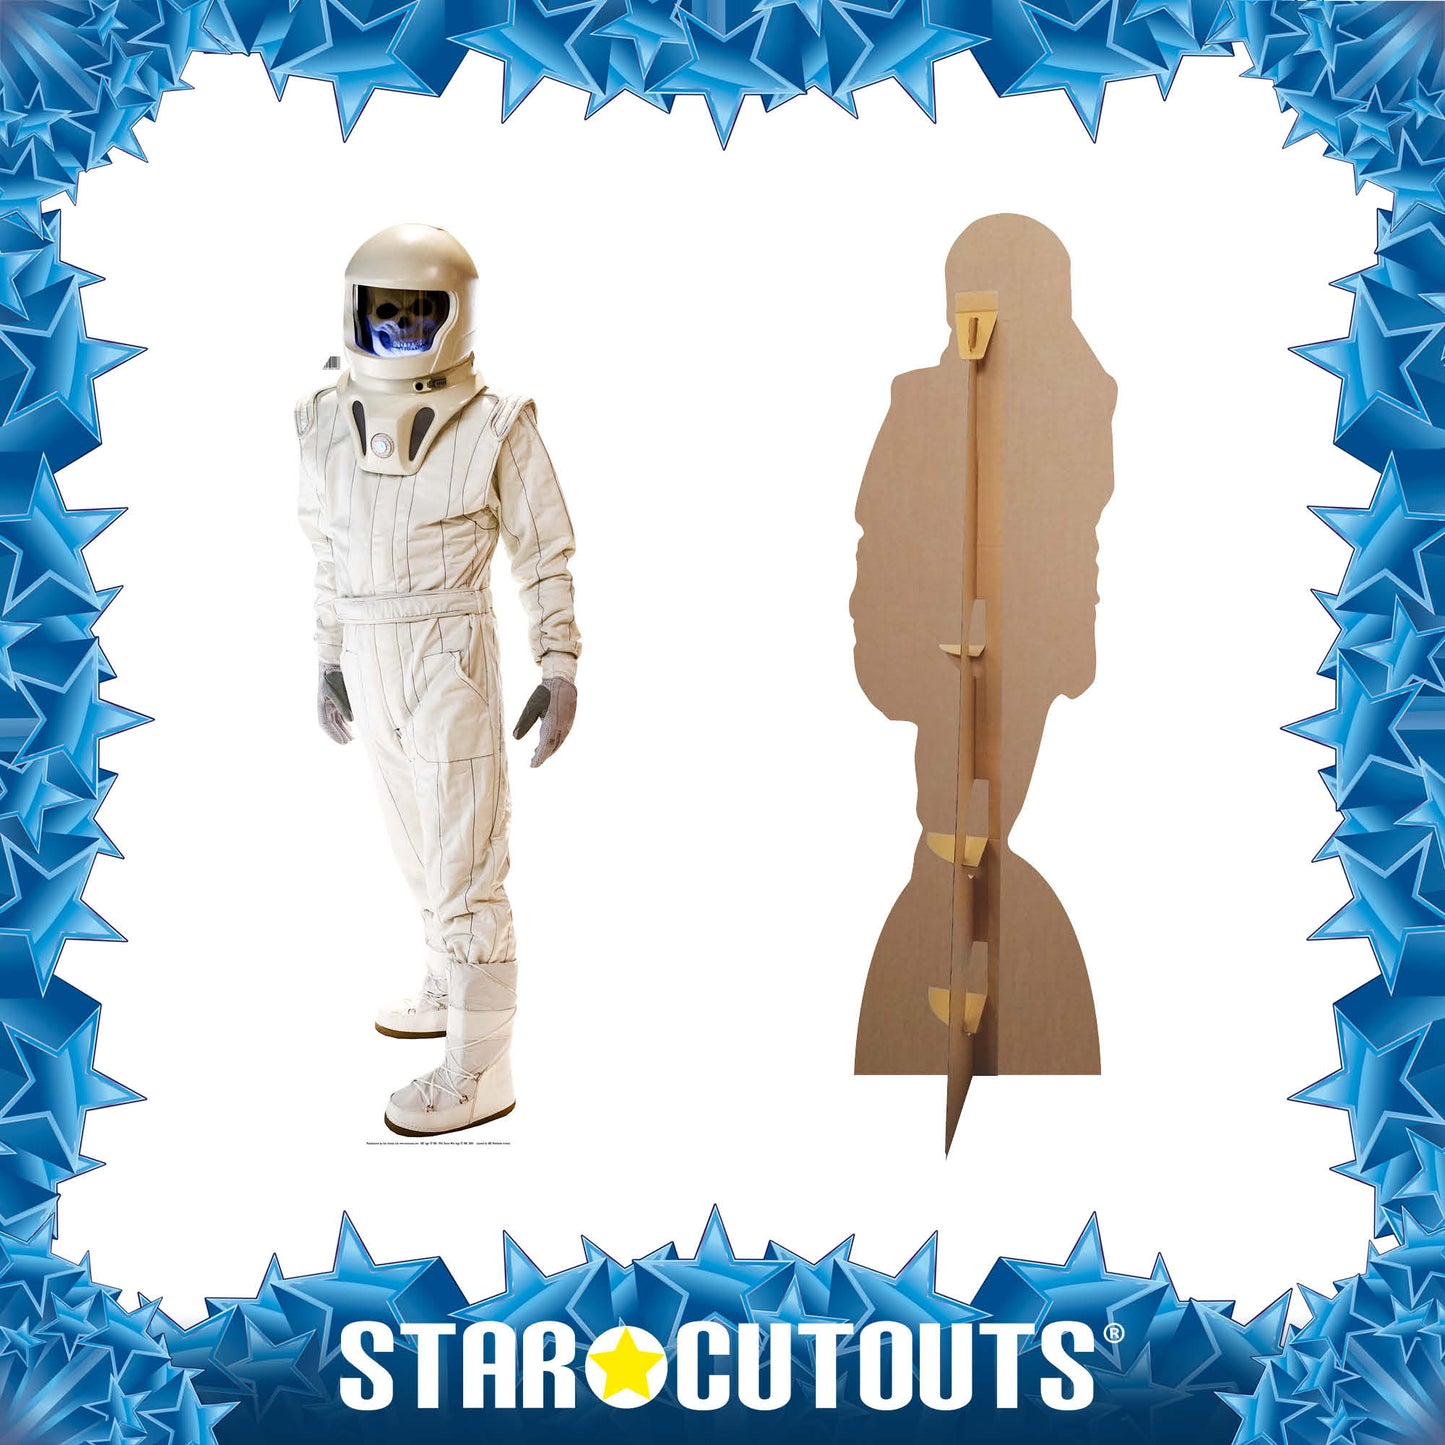 Vashta Nerada Cardboard Cut Out Height 185cm - Star Cutouts